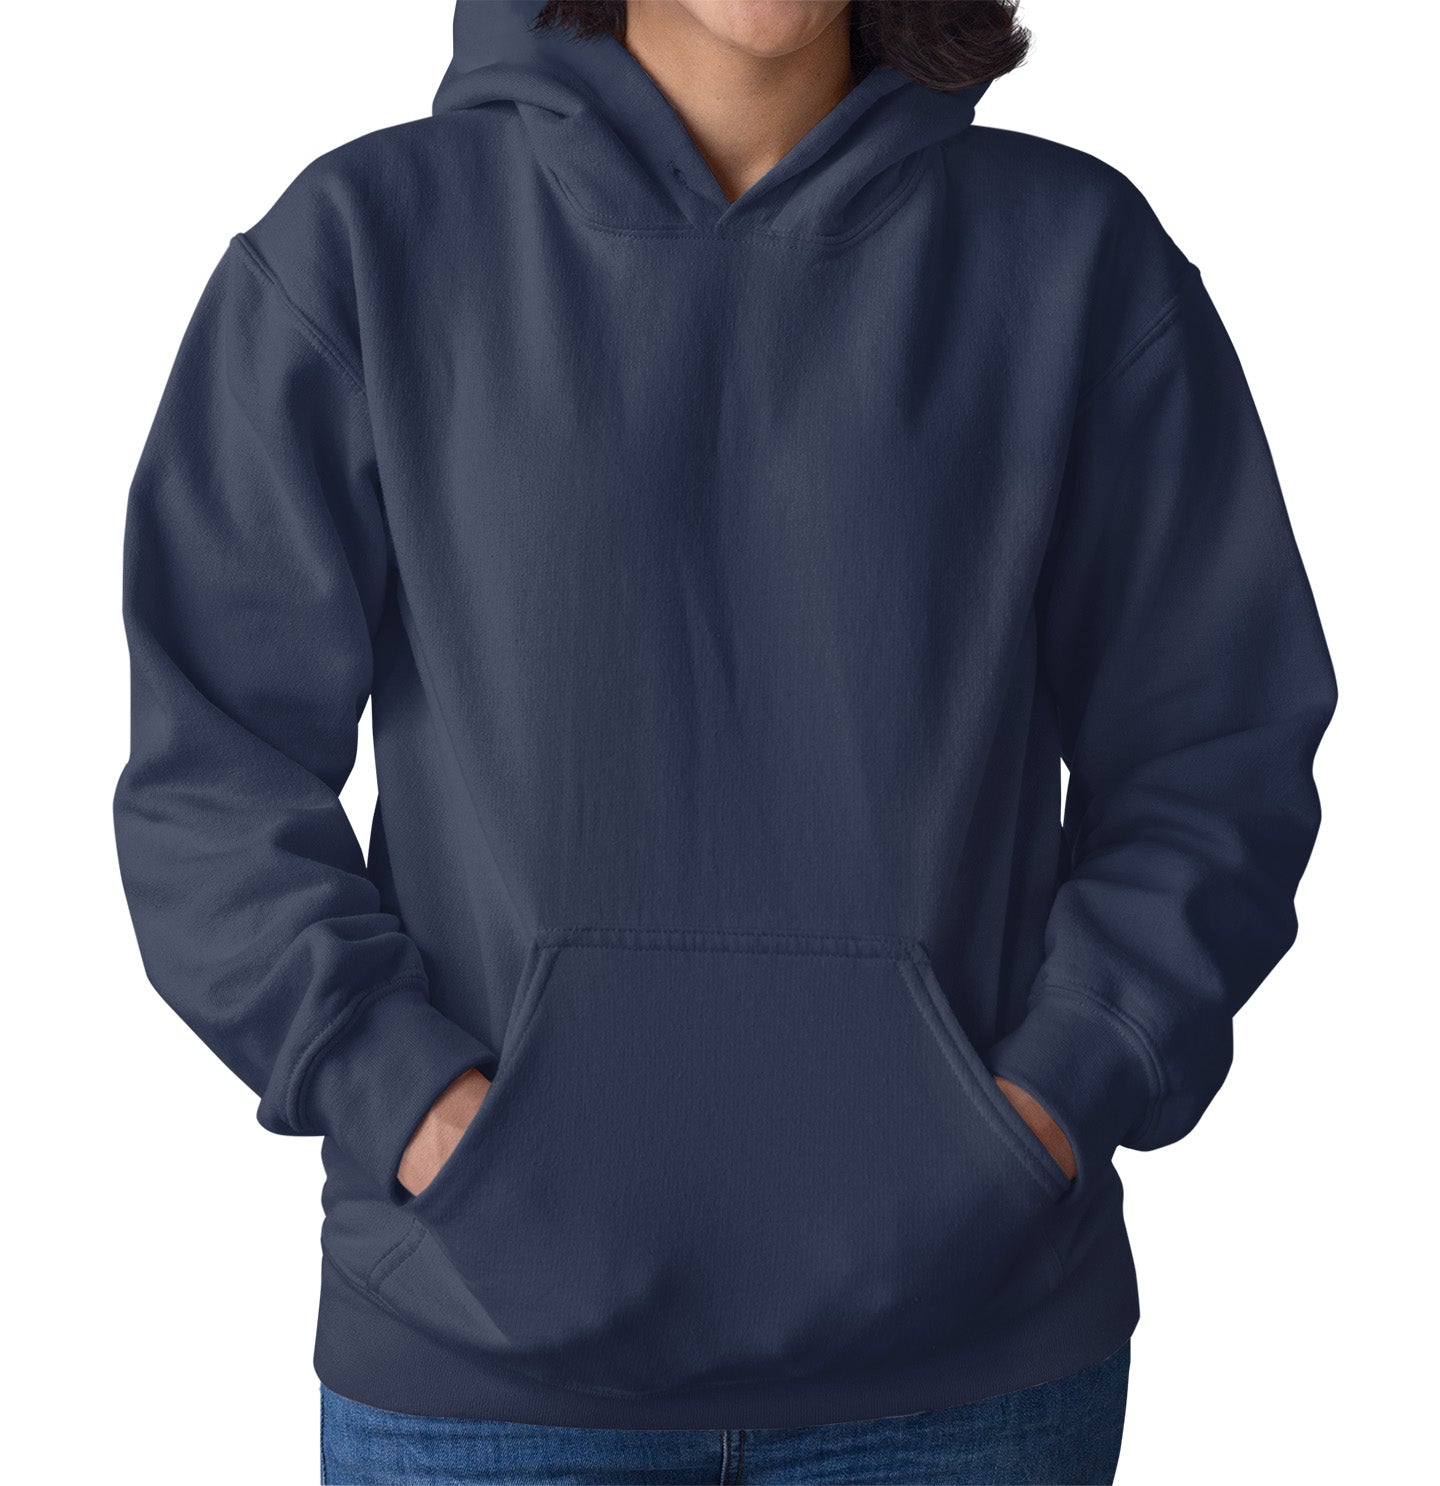 Golden Mom Paw Text - Personalized Custom Adult Unisex Hoodie Sweatshirt